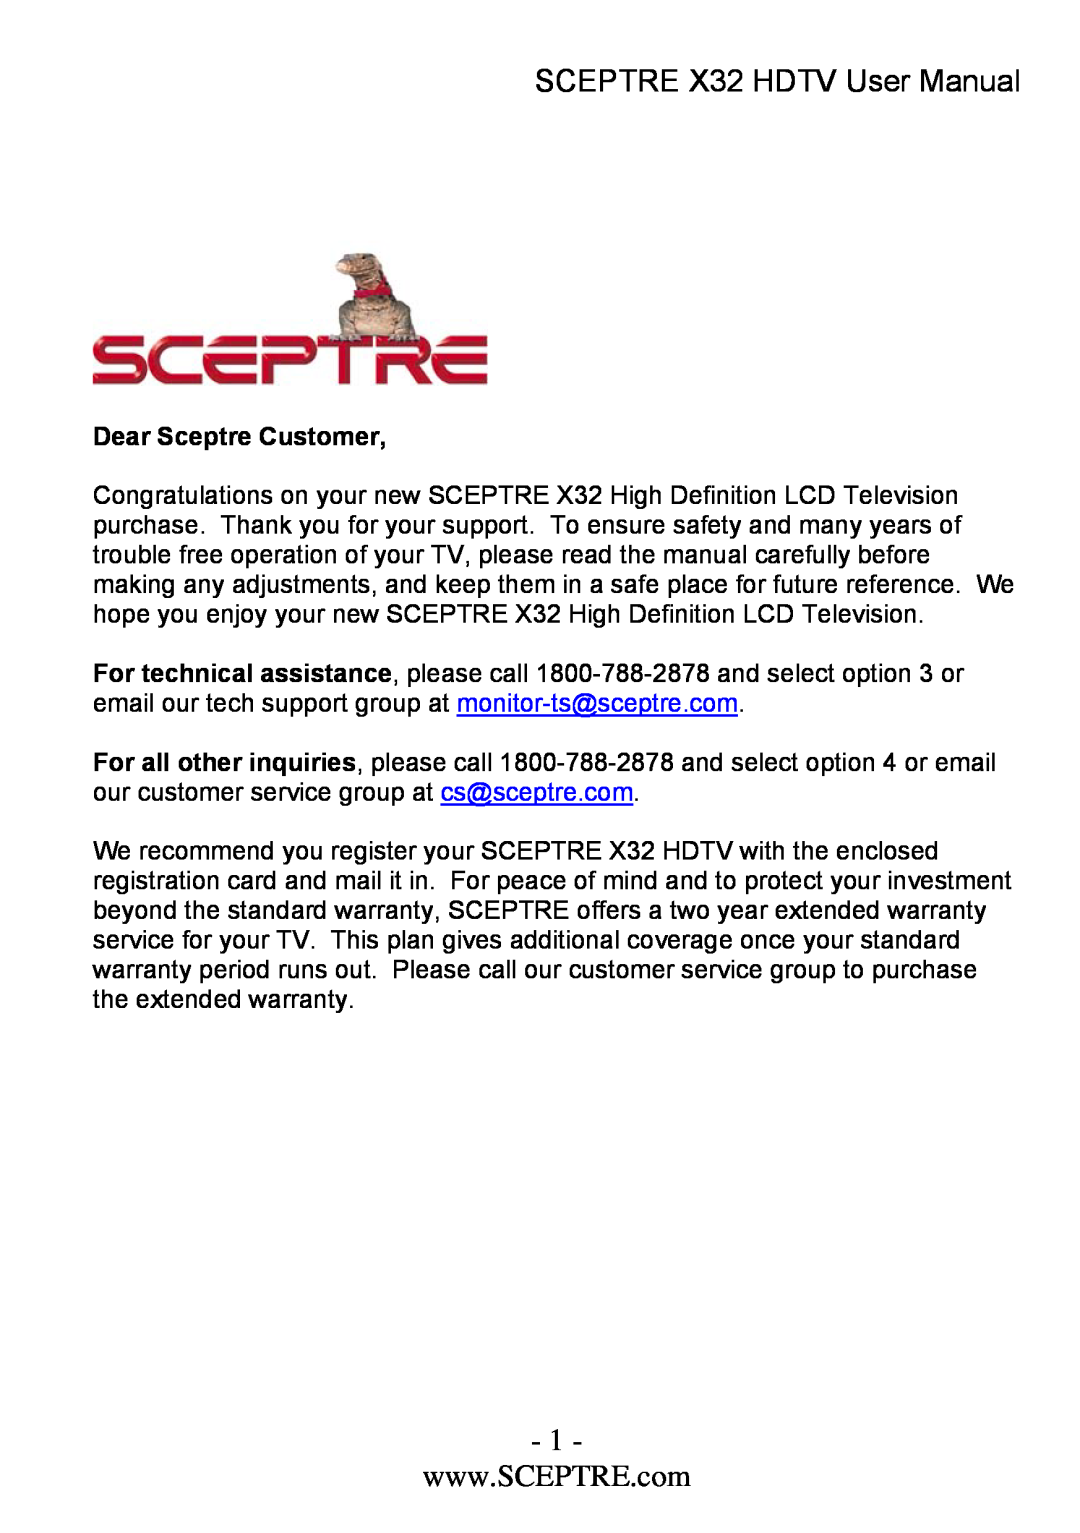 Sceptre Technologies x32 user manual SCEPTRE X32 HDTV User Manual, Dear Sceptre Customer 